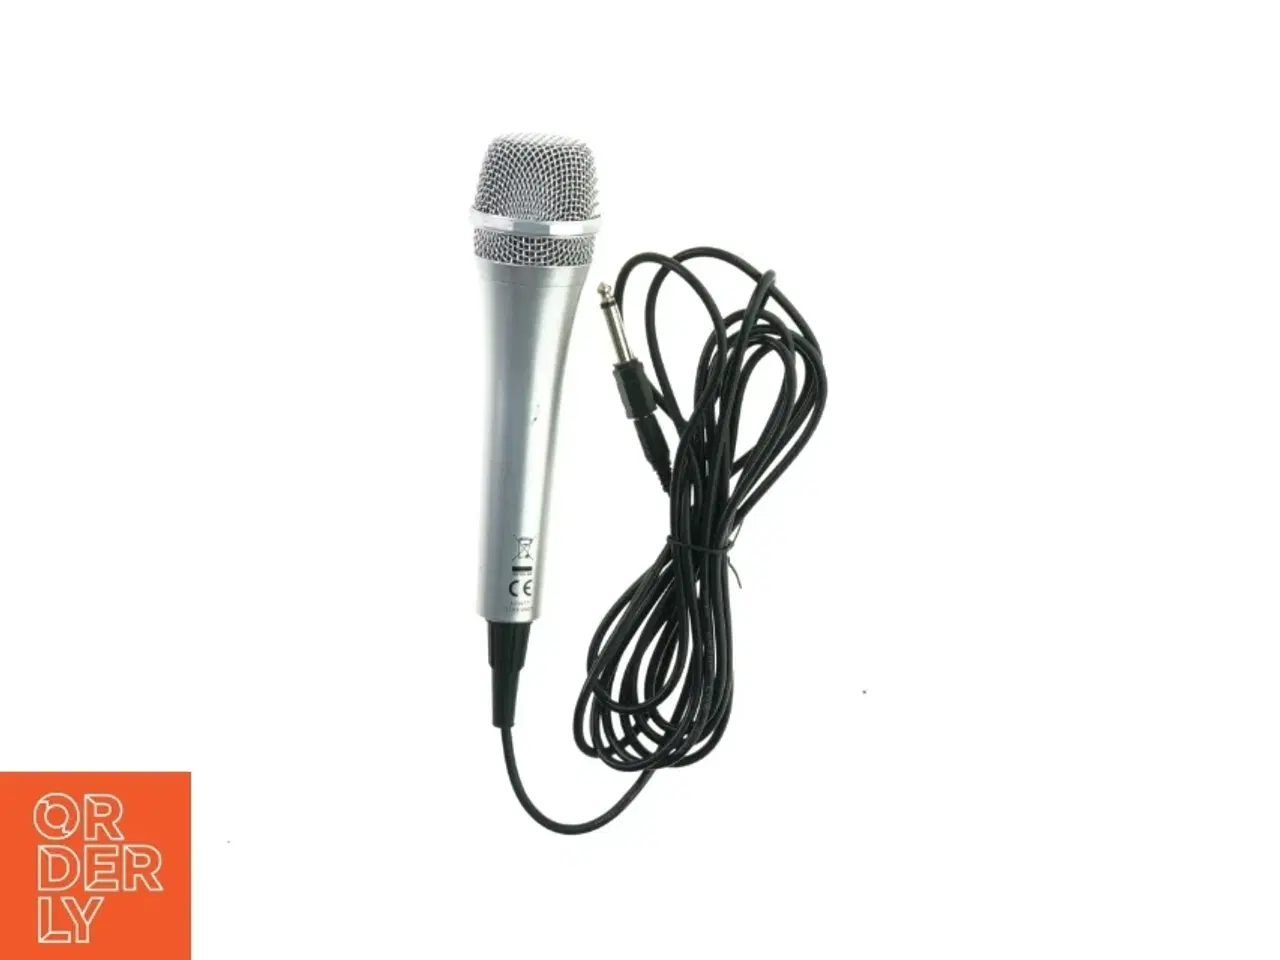 Billede 4 - Mikrofon fra Top Toy (str. 22 x 4 cm)